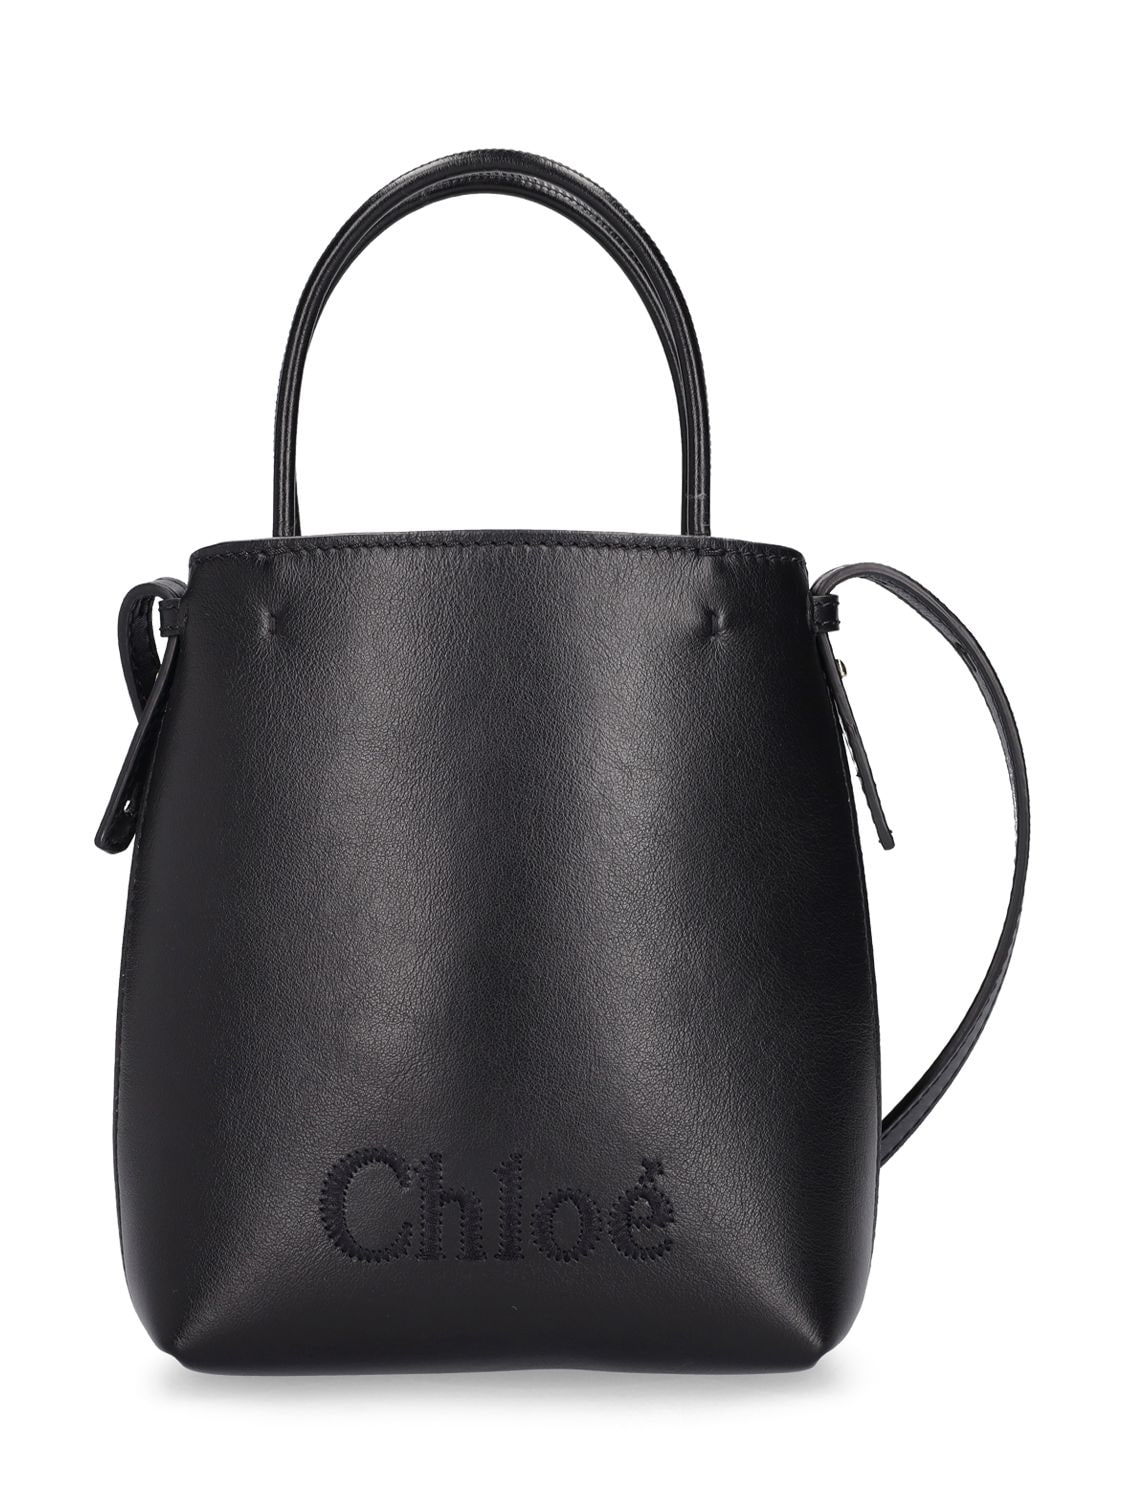 Chloé Sense Leather Top Handle Bag In Black